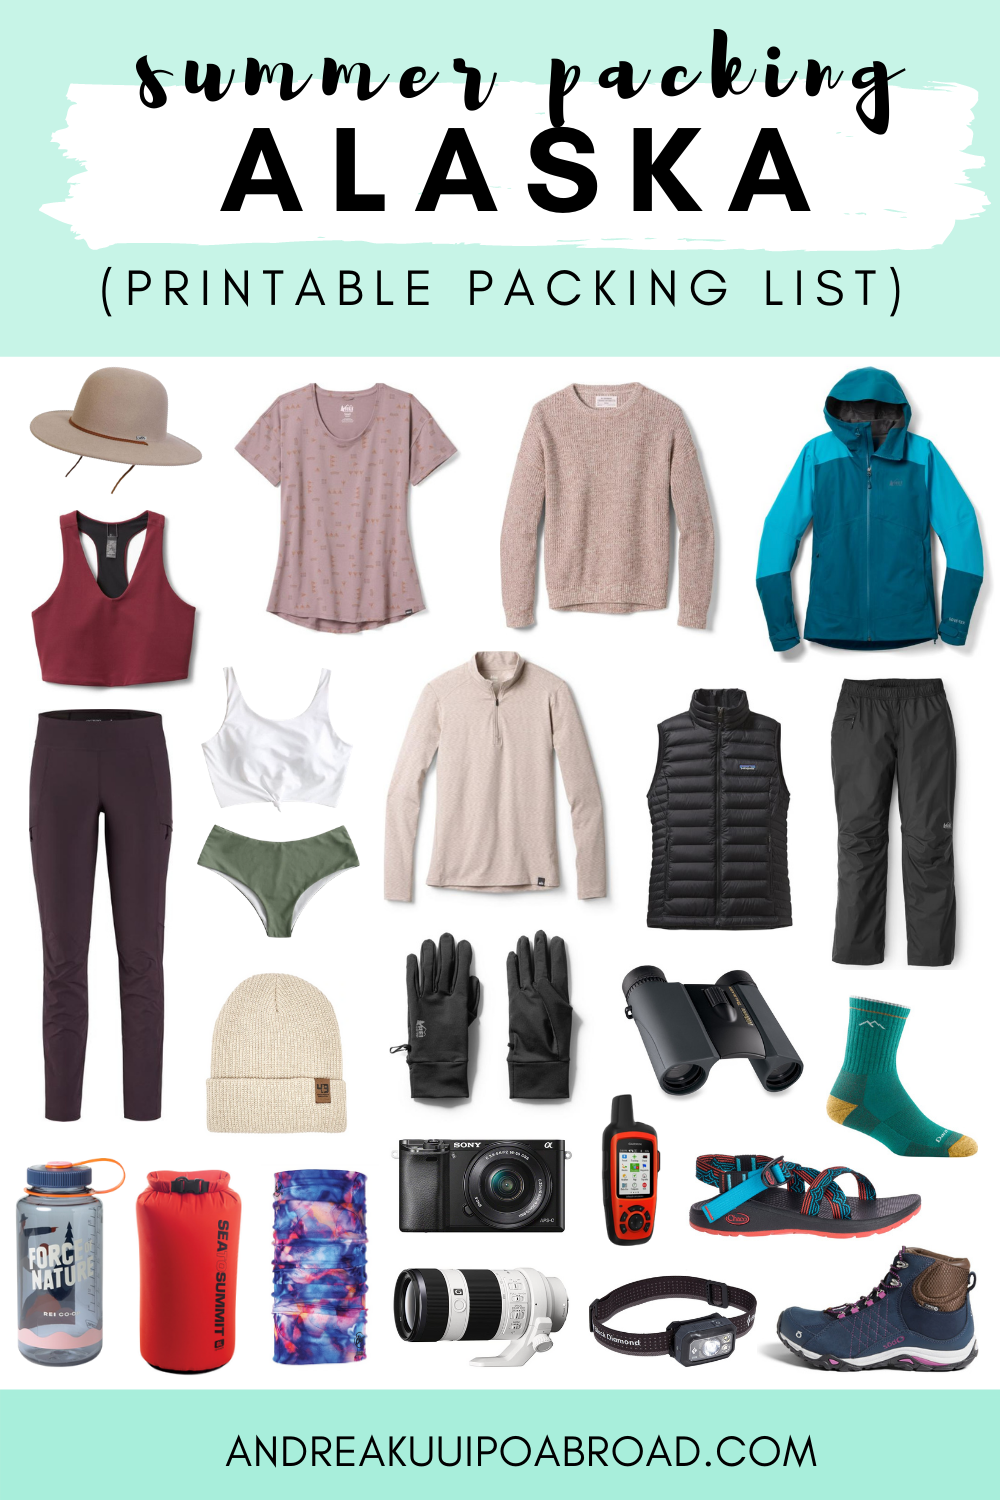 30 Alaska Summer Packing List Items (Printable Checklist) - Andrea